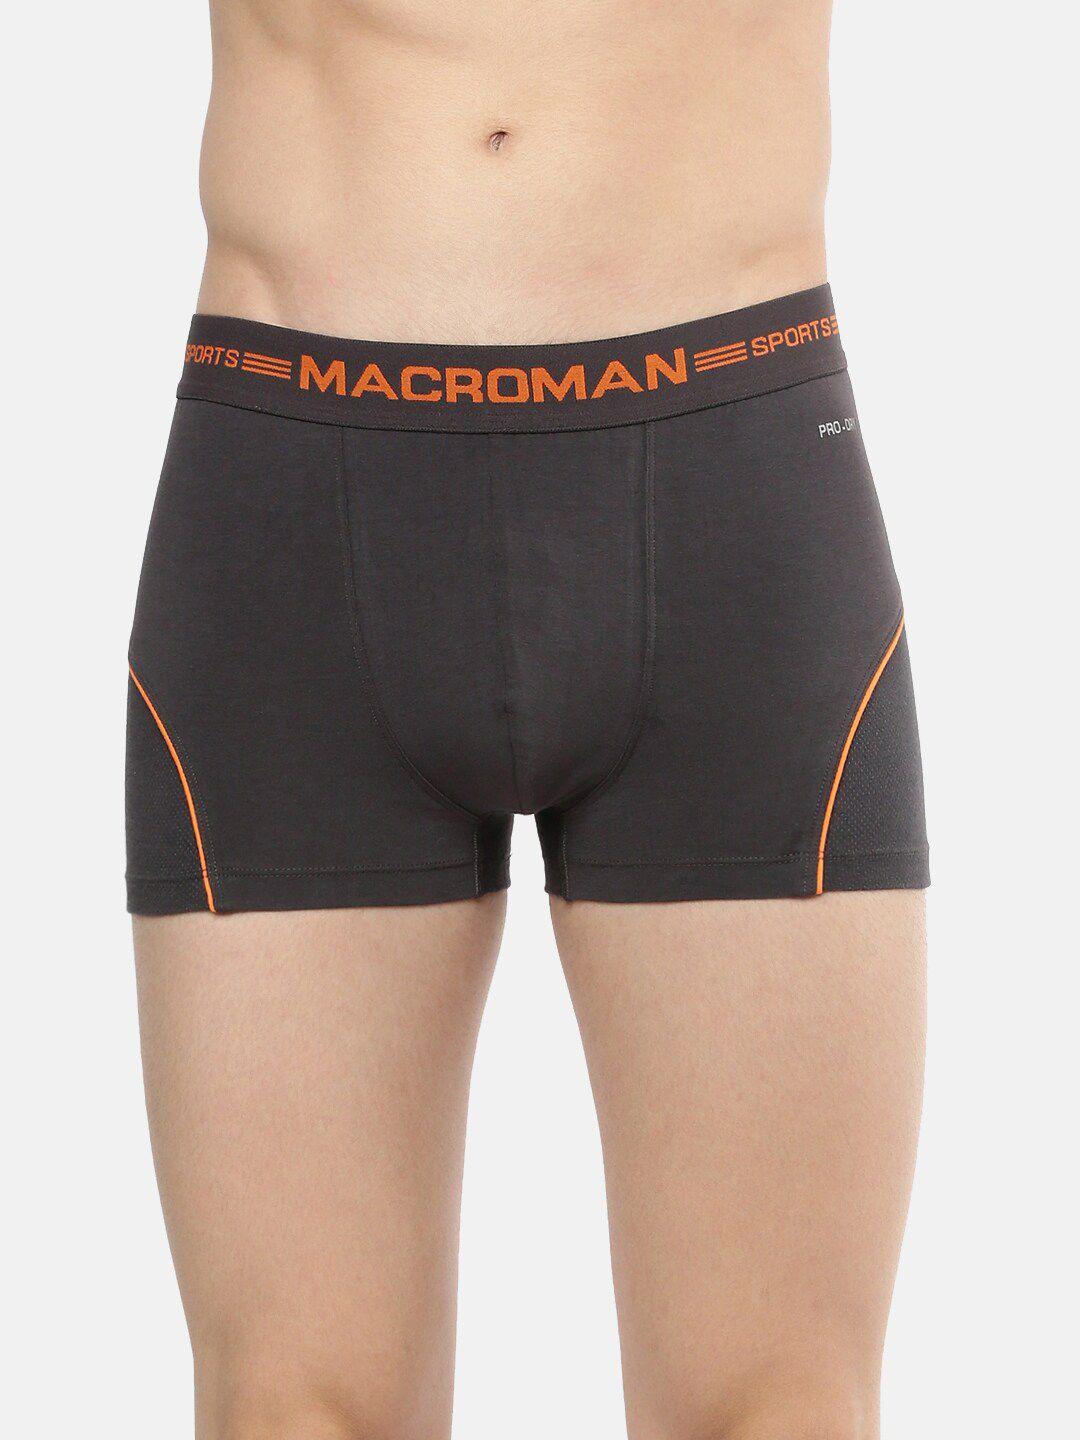 macroman m-series men moisture wicking cotton sports trunk